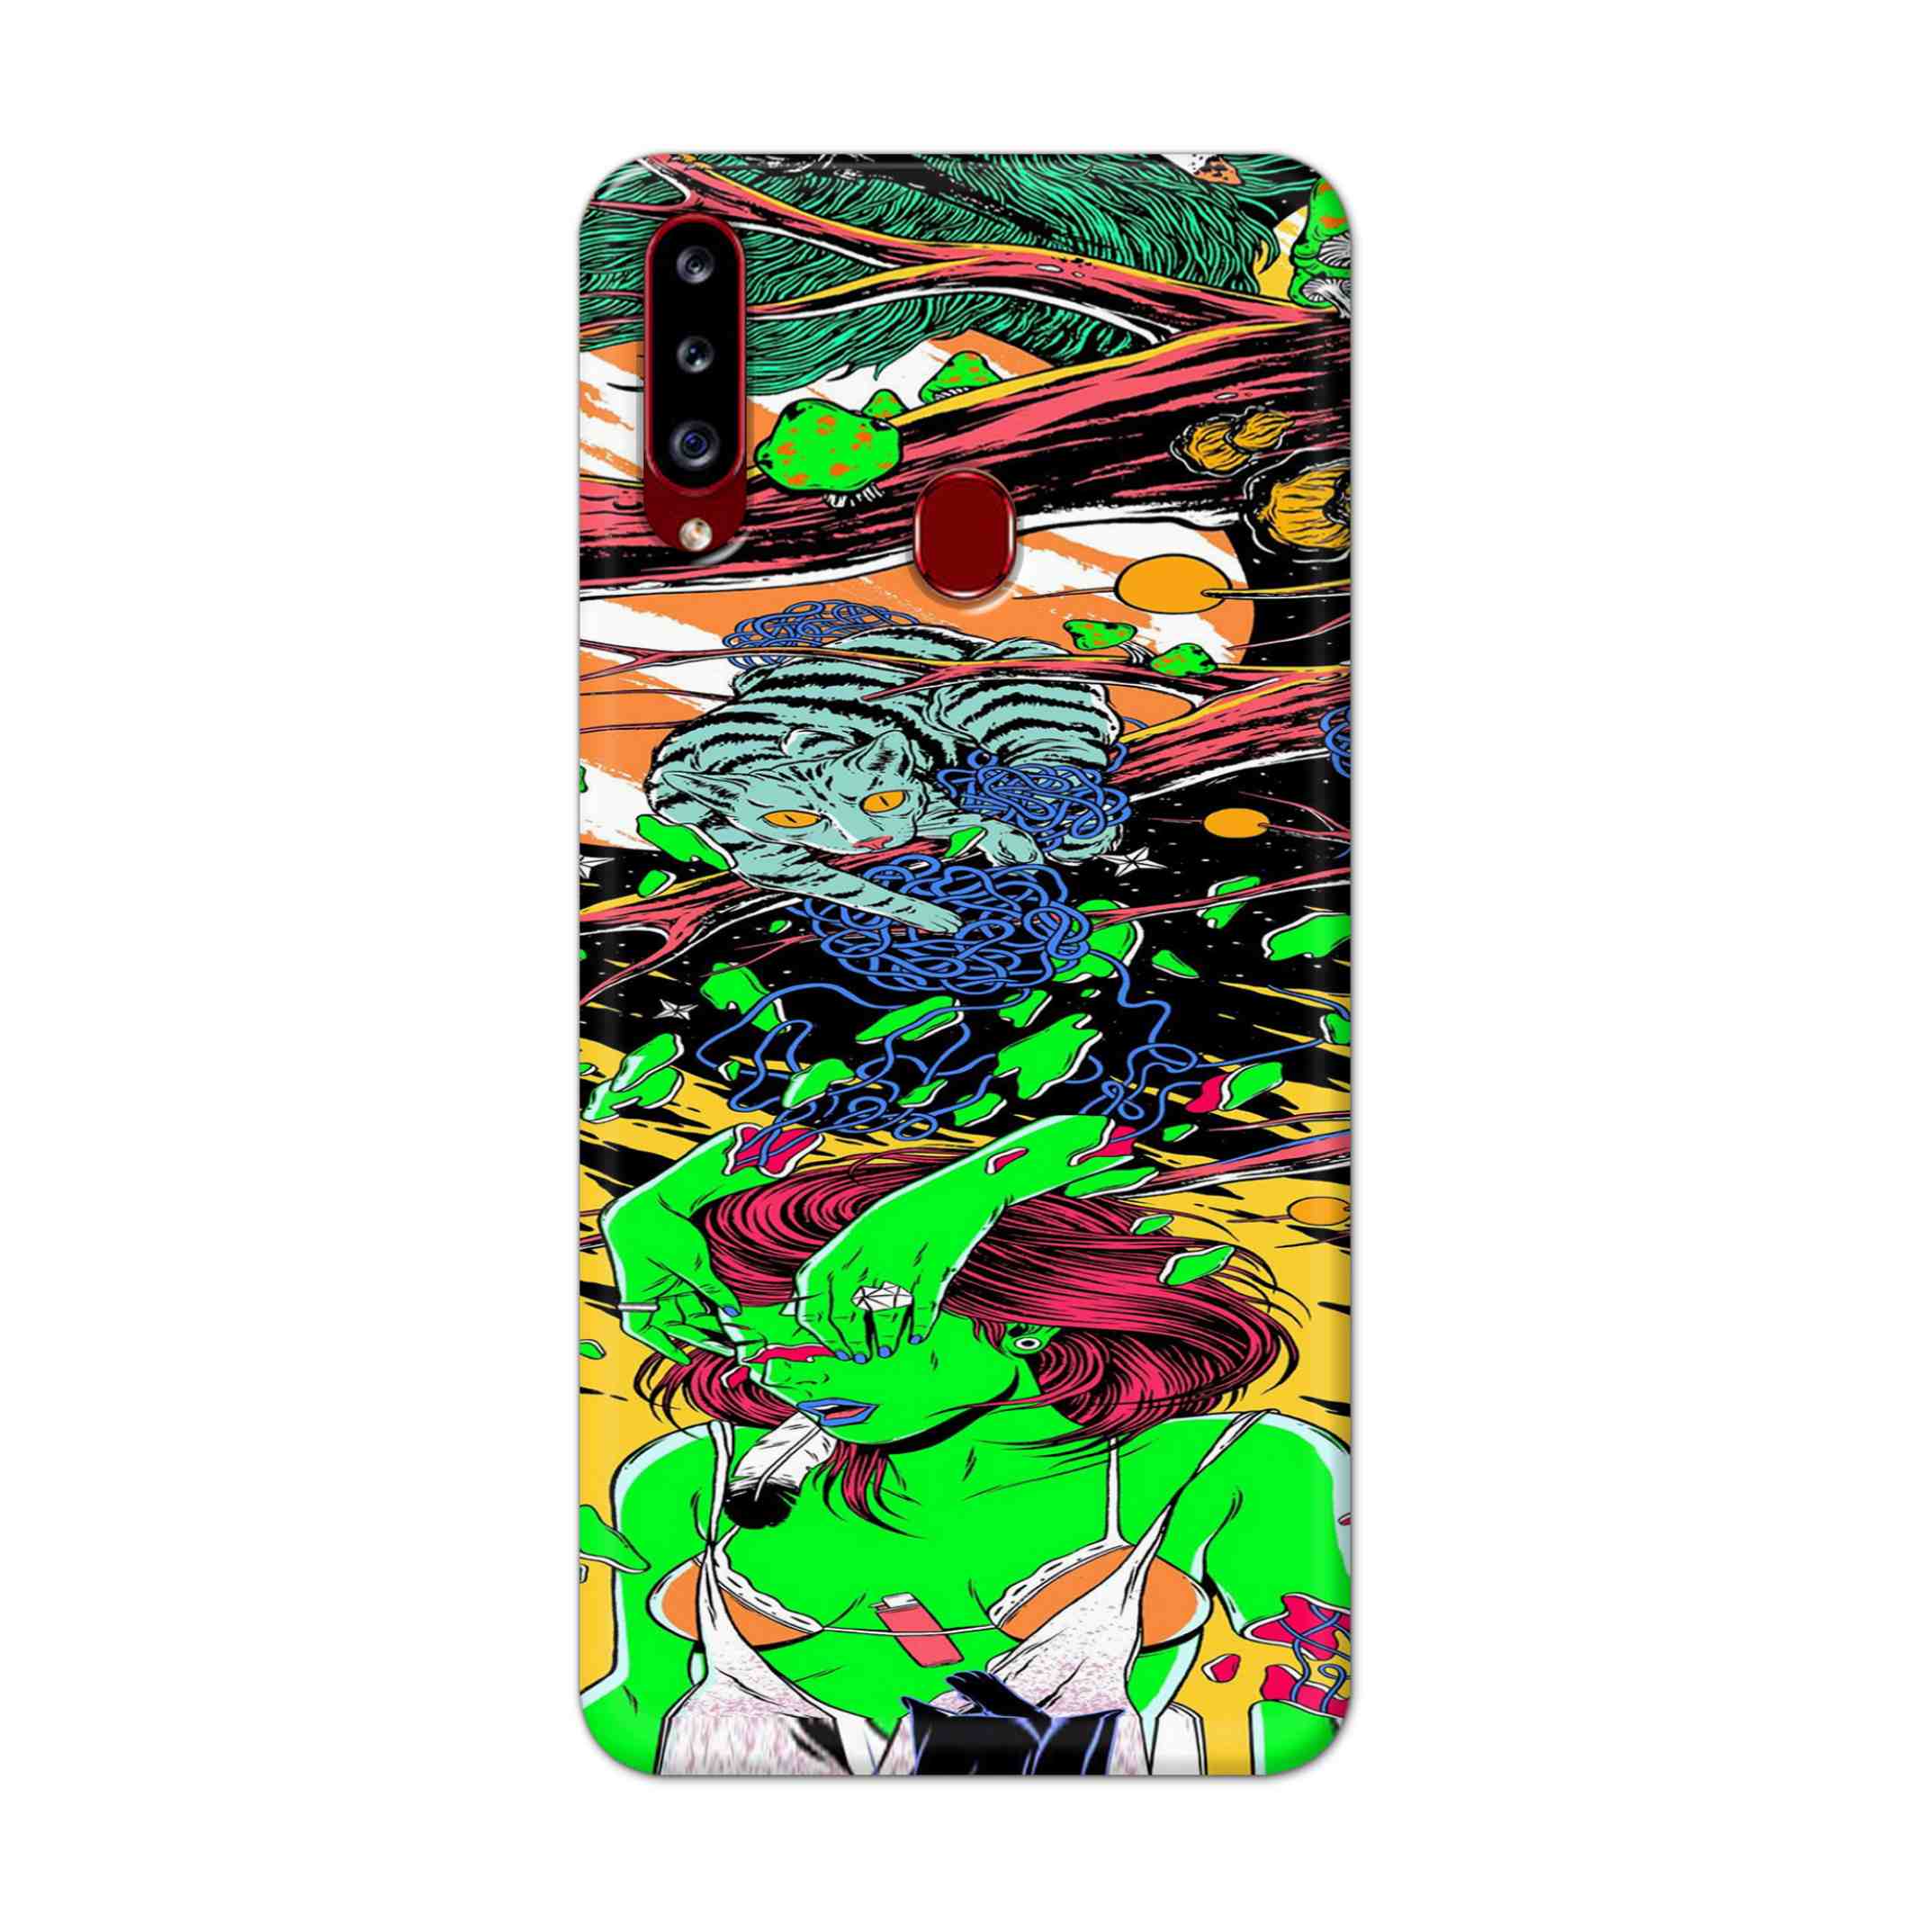 Buy Green Girl Art Hard Back Mobile Phone Case Cover For Samsung A20s Online